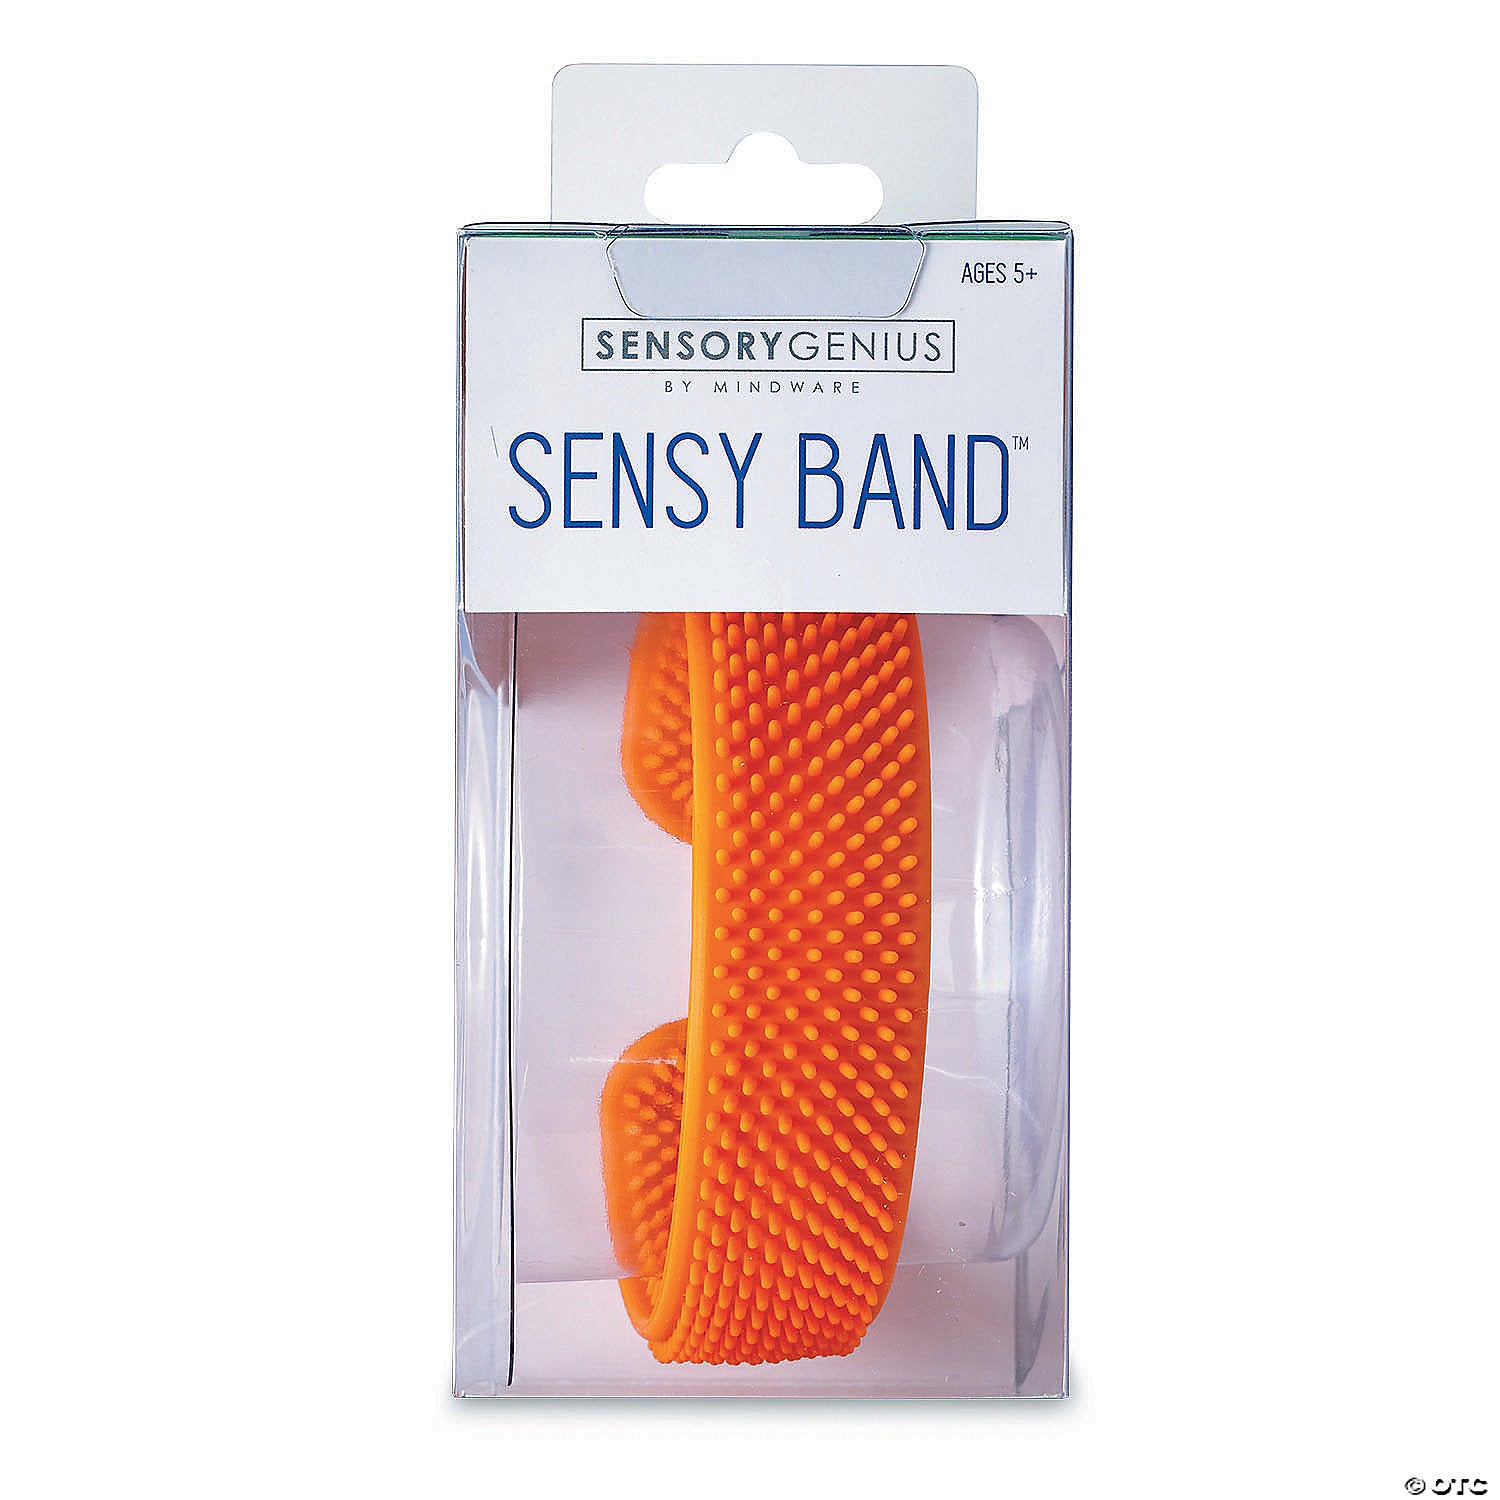 Sensory Genius Sensy Band    